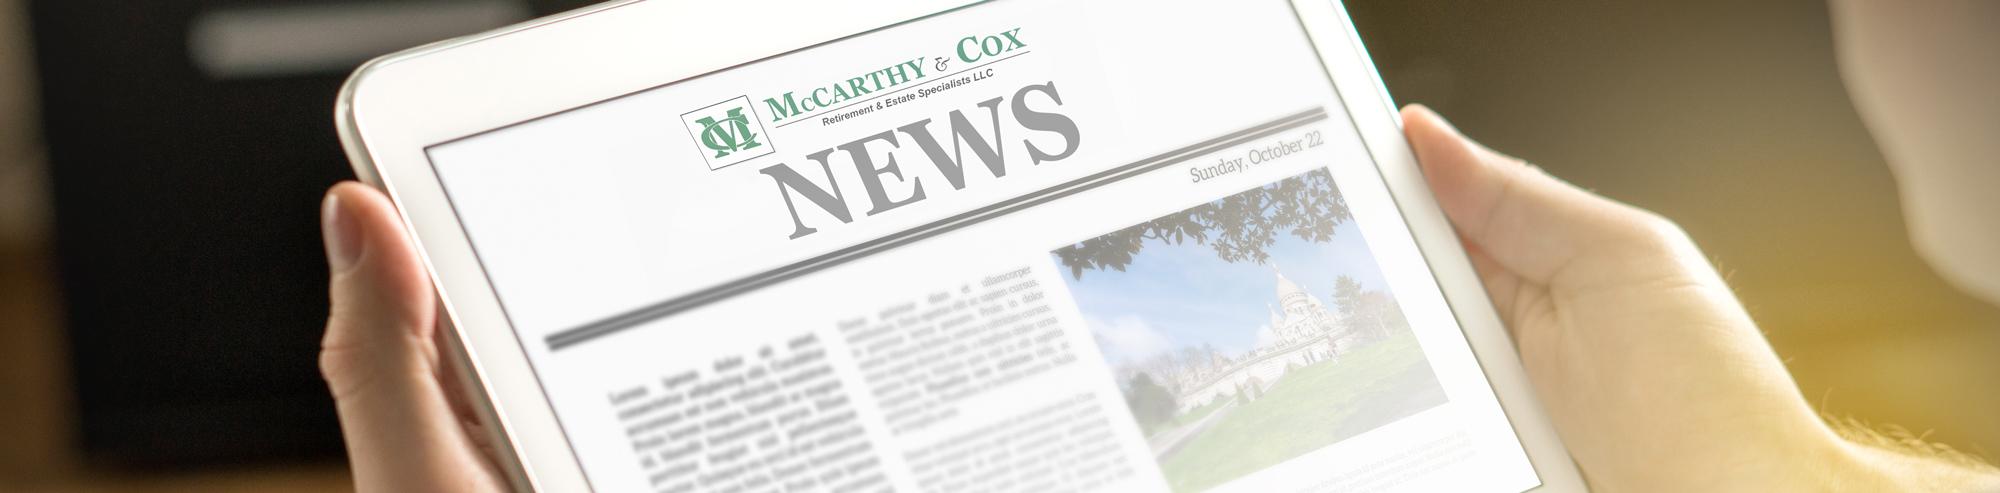 McCarthy and Cox News 